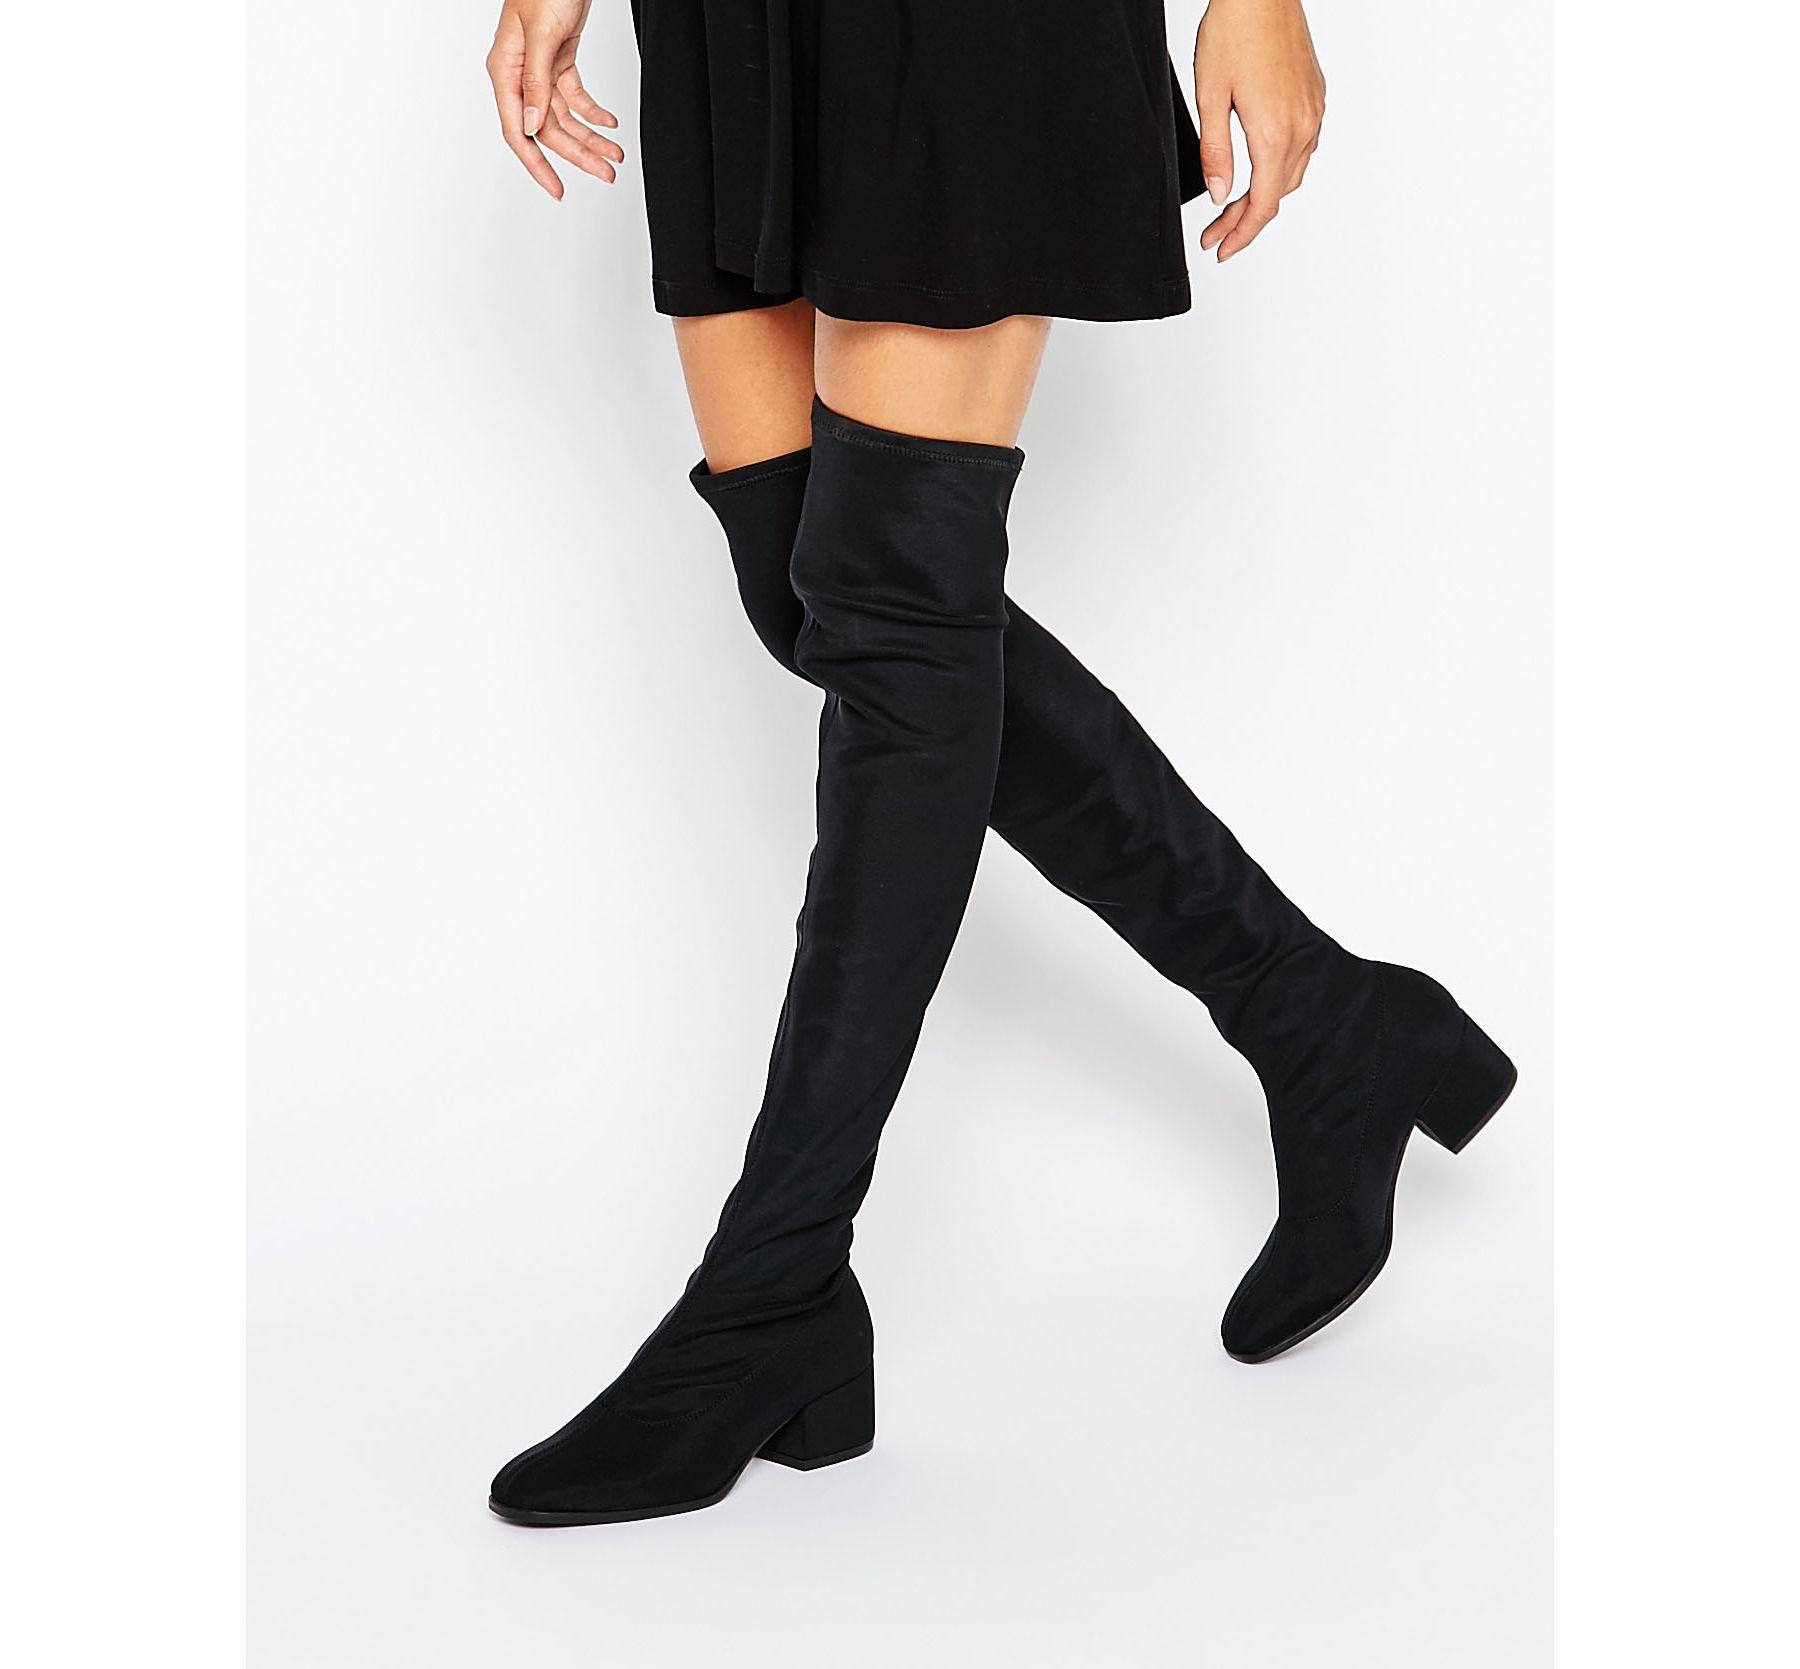 Vagabond Leather Daisy Over The Knee - Black Textile - Lyst